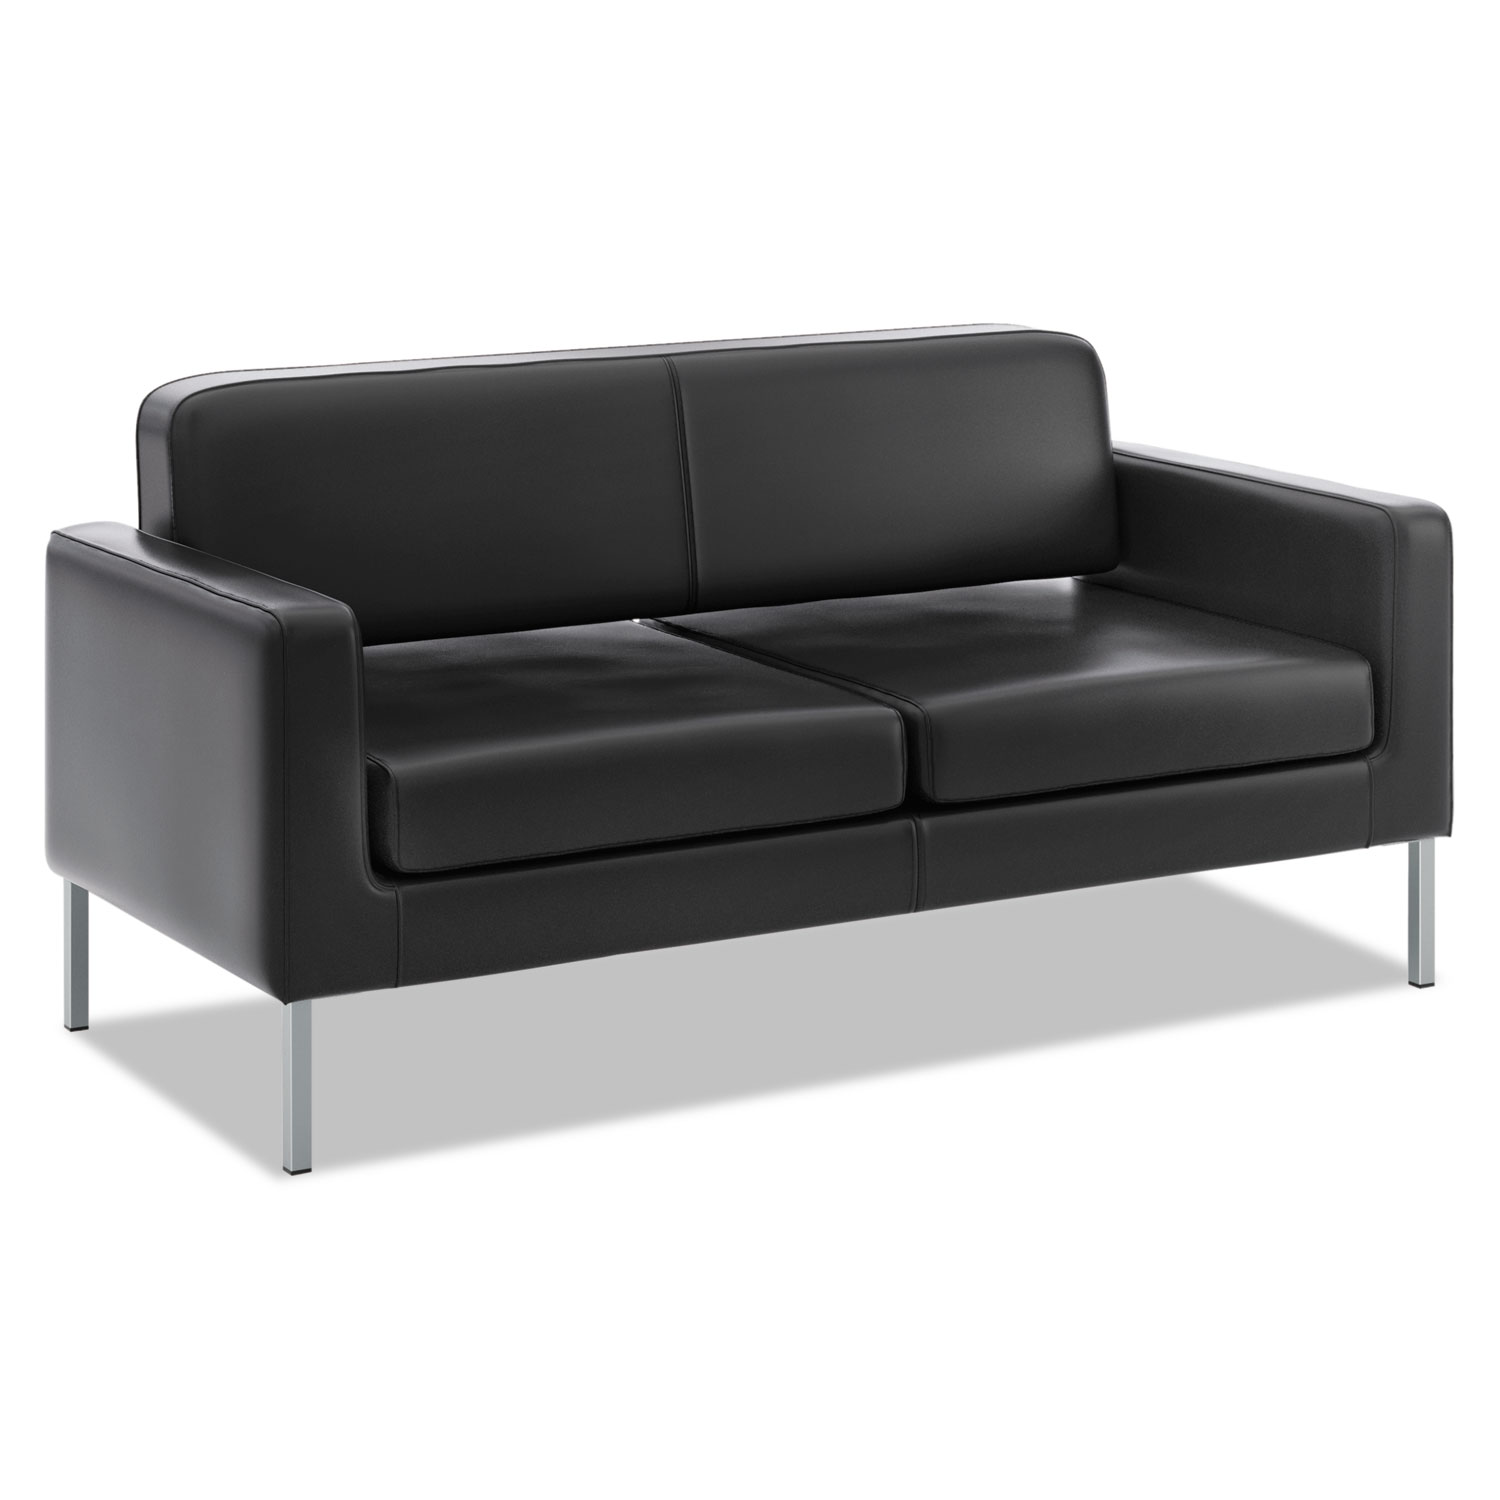 VL888 Series Reception Seating Sofa, 67 x 28 x 30 1/2, Black SofThread™ Leather